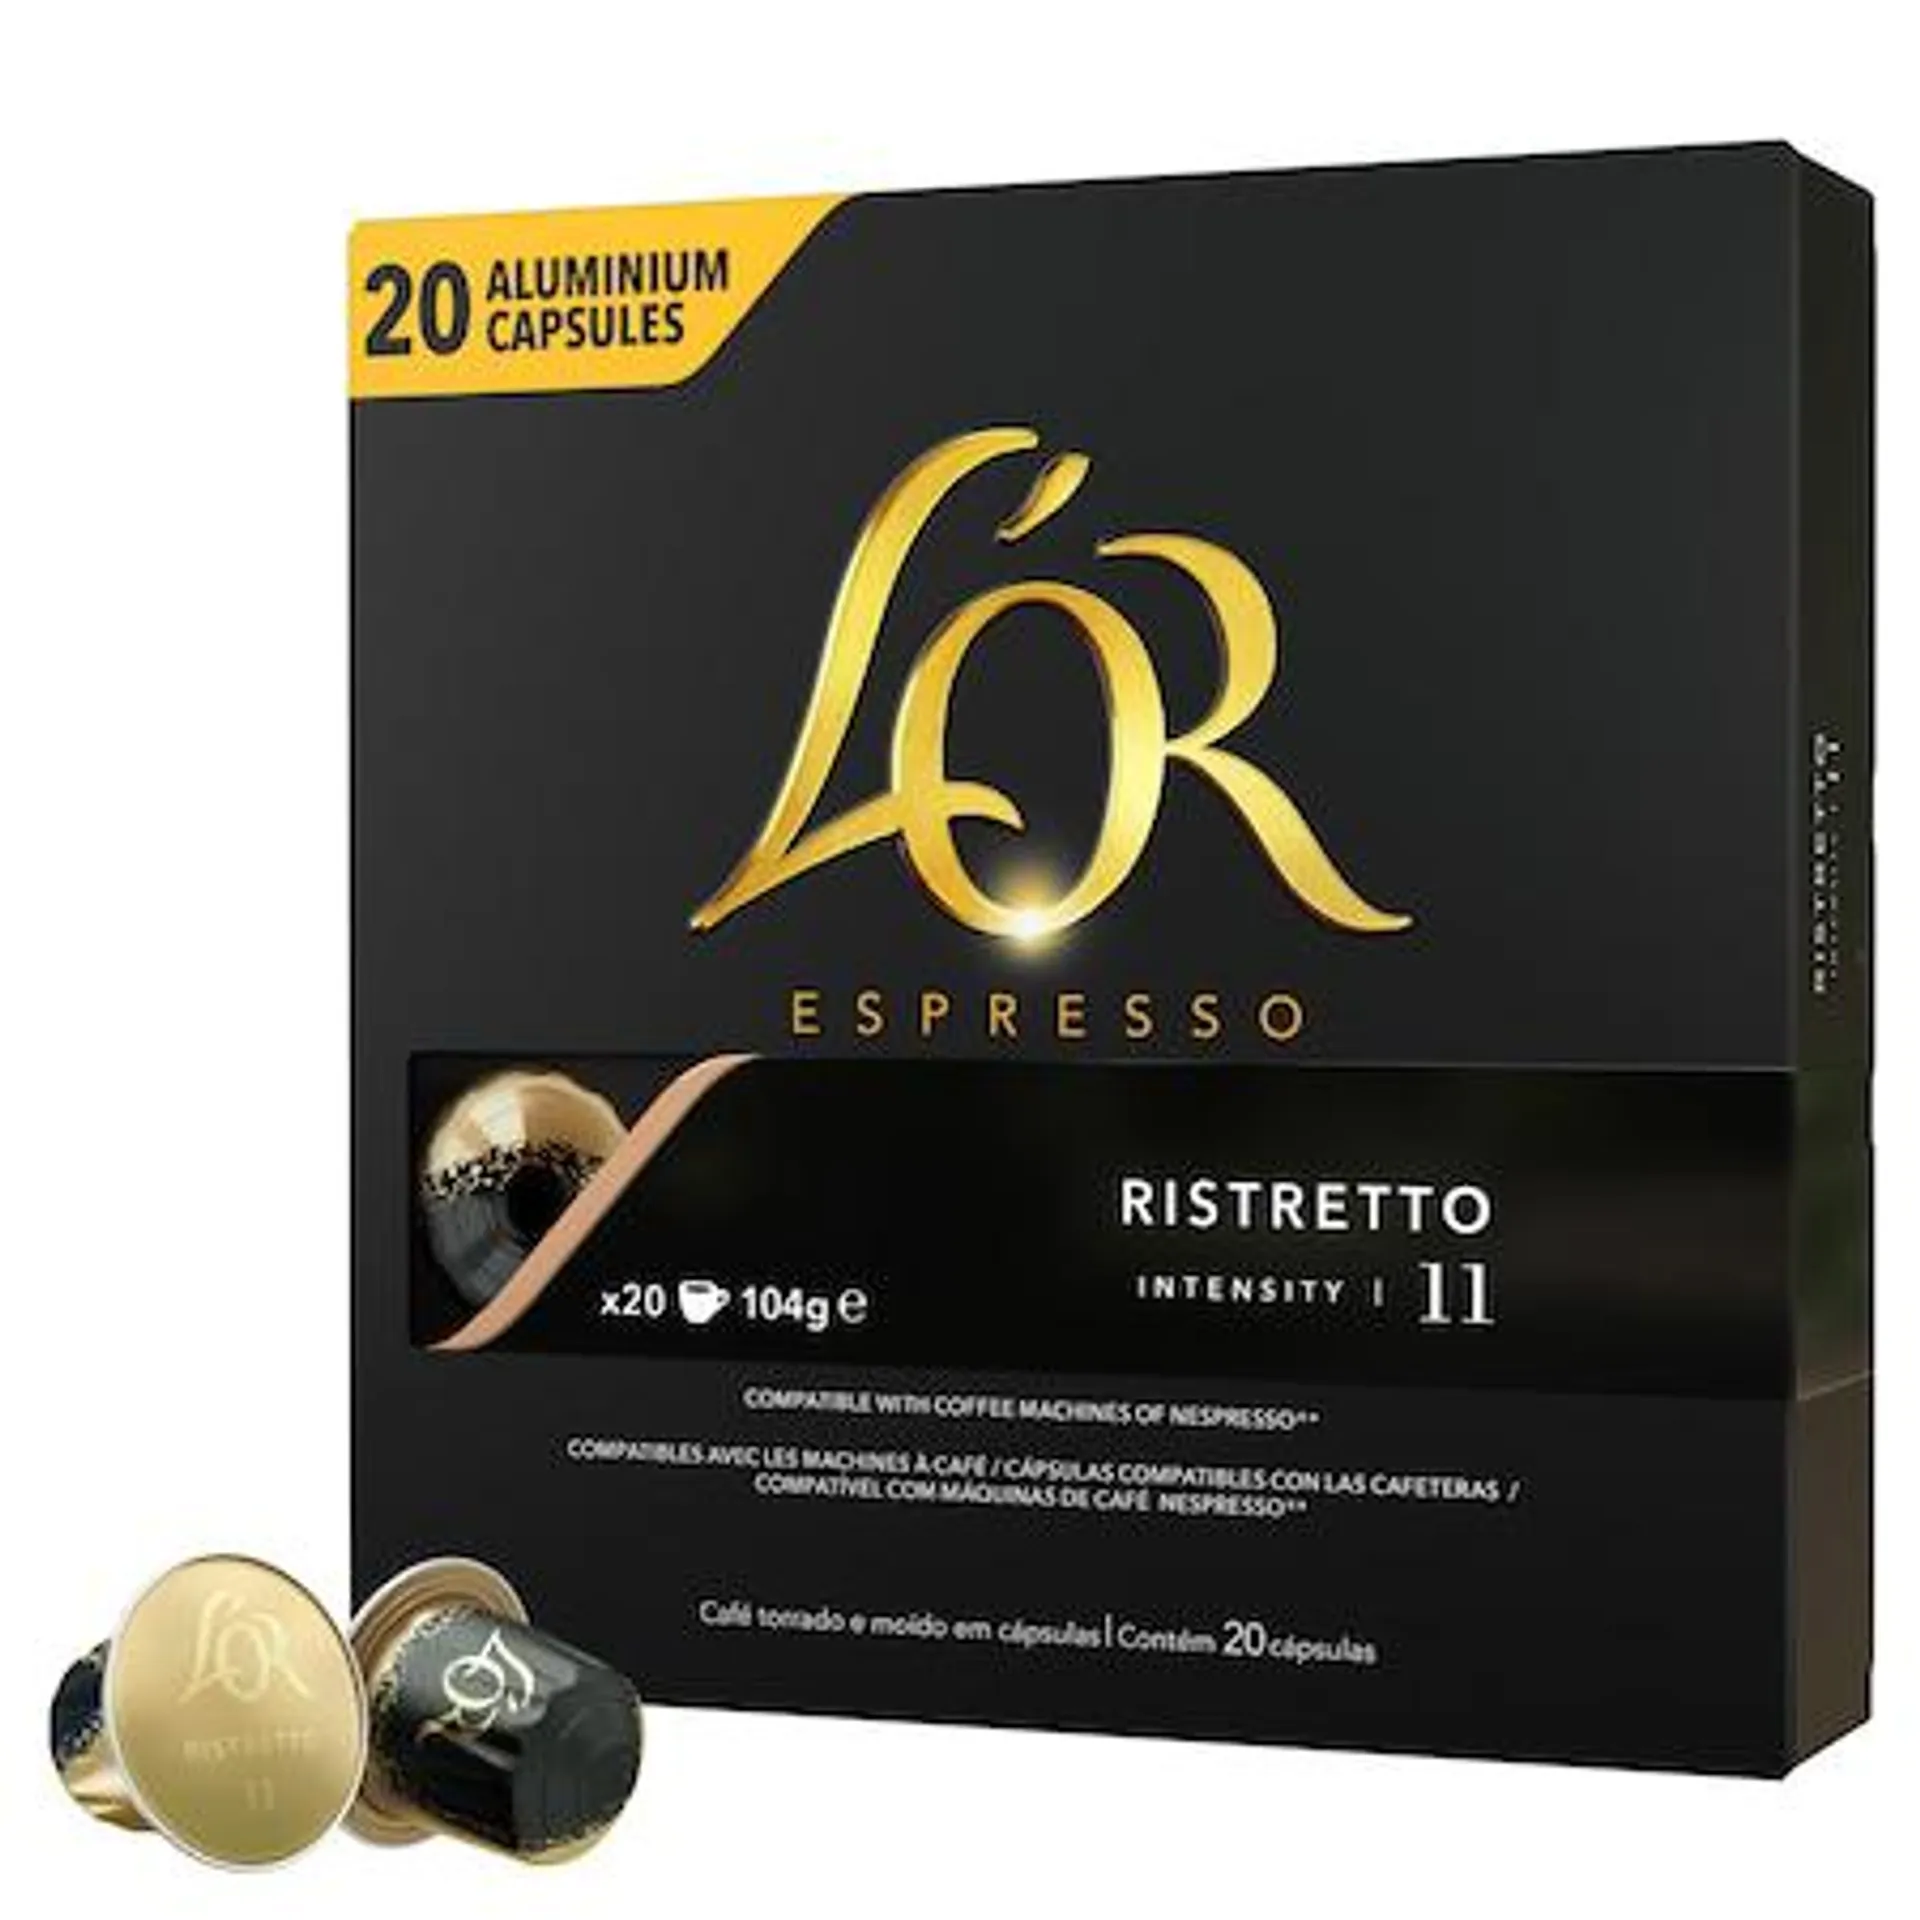 Capsule cafea, L'OR Espresso Ristretto, intensitate 11, 20 bauturi x 25 ml, compatibile cu sistemul Nespresso®*, 20 capsule aluminiu